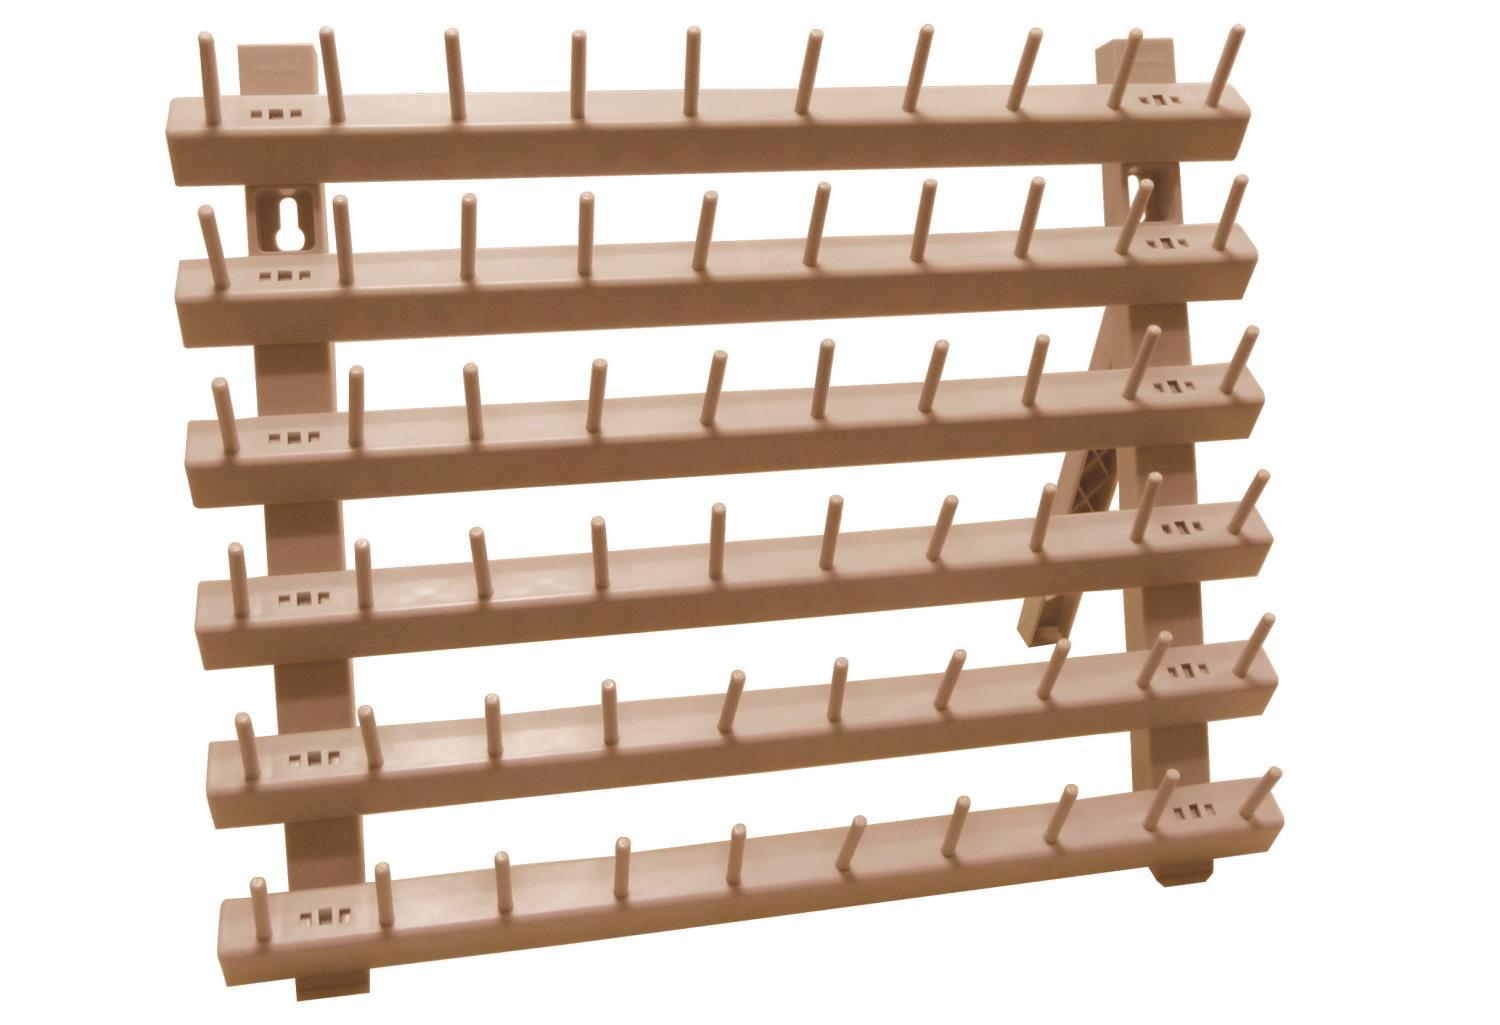 SPR-013 - Sew Mate - Trådrulle rack/stilling 60 pinnar for 60 rullar